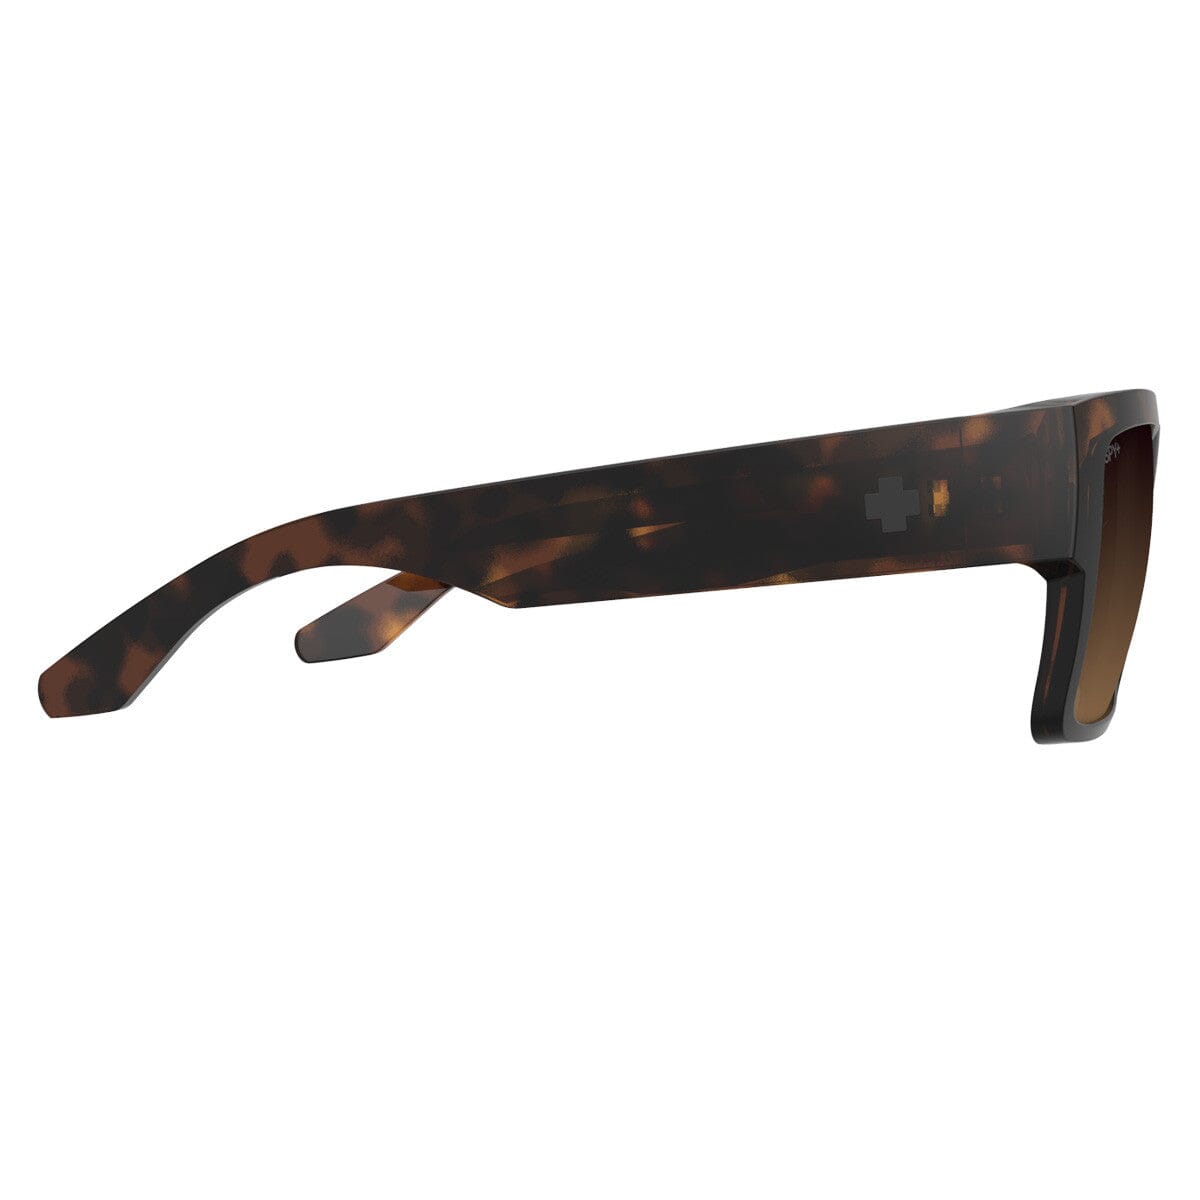 SPY Cyrus Honey Tort - Happy Dark Brown Fade Sunglasses Sunglasses Spy 